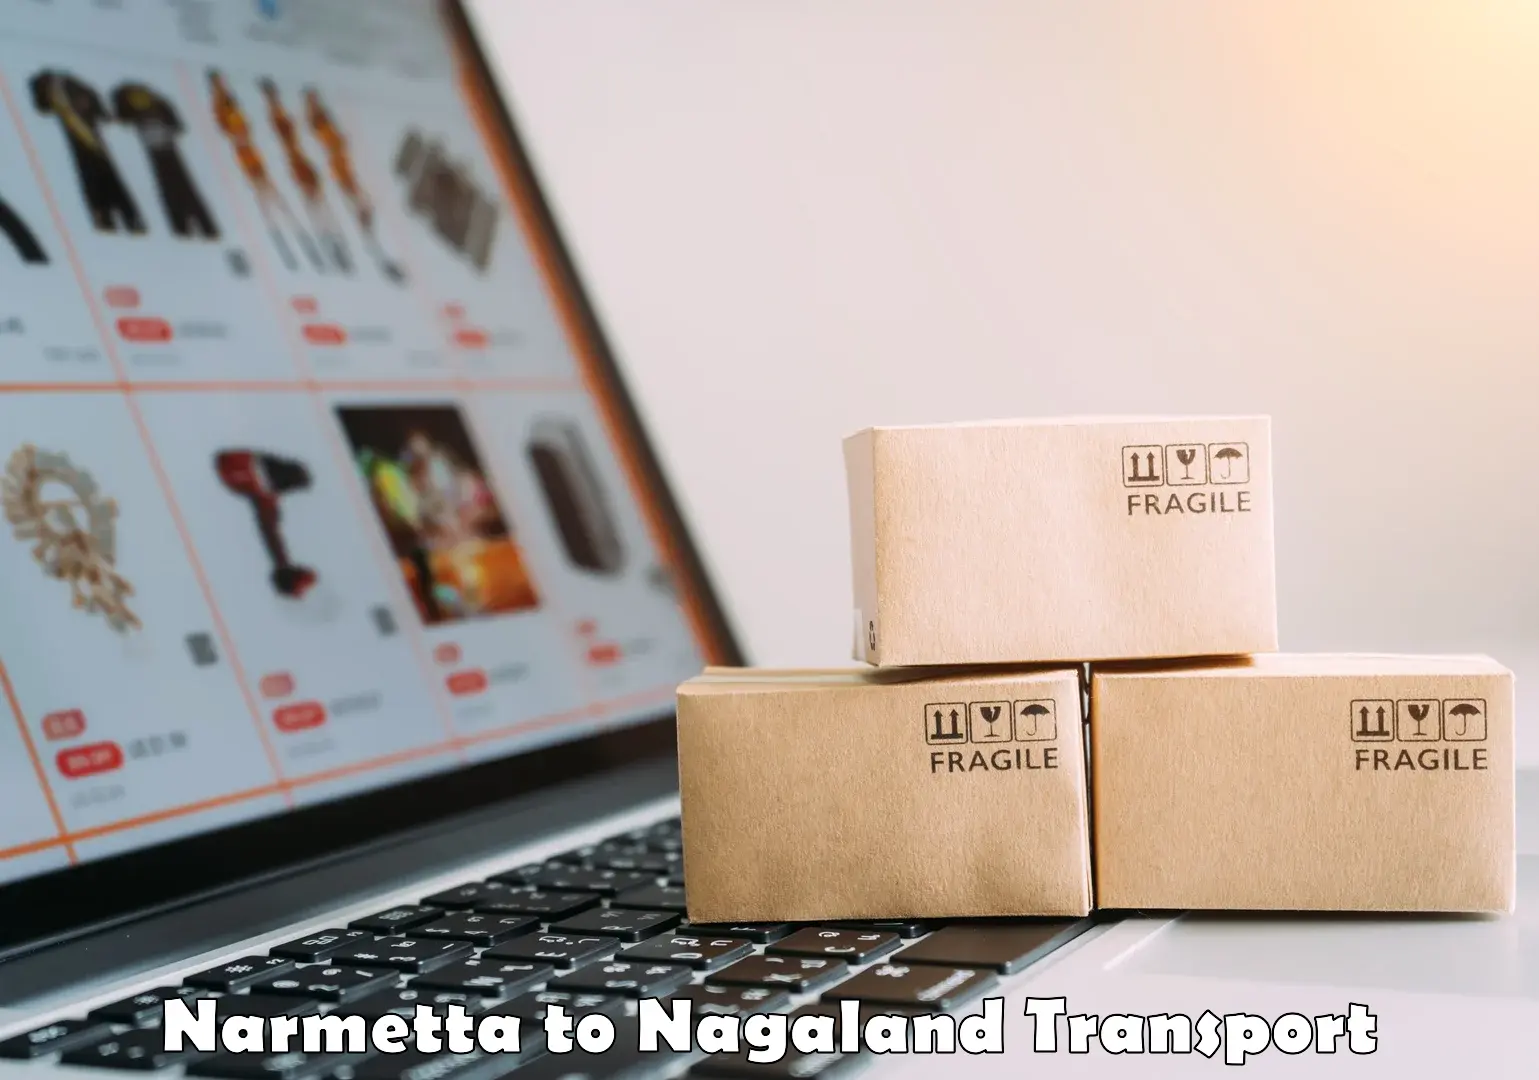 Commercial transport service Narmetta to Mon